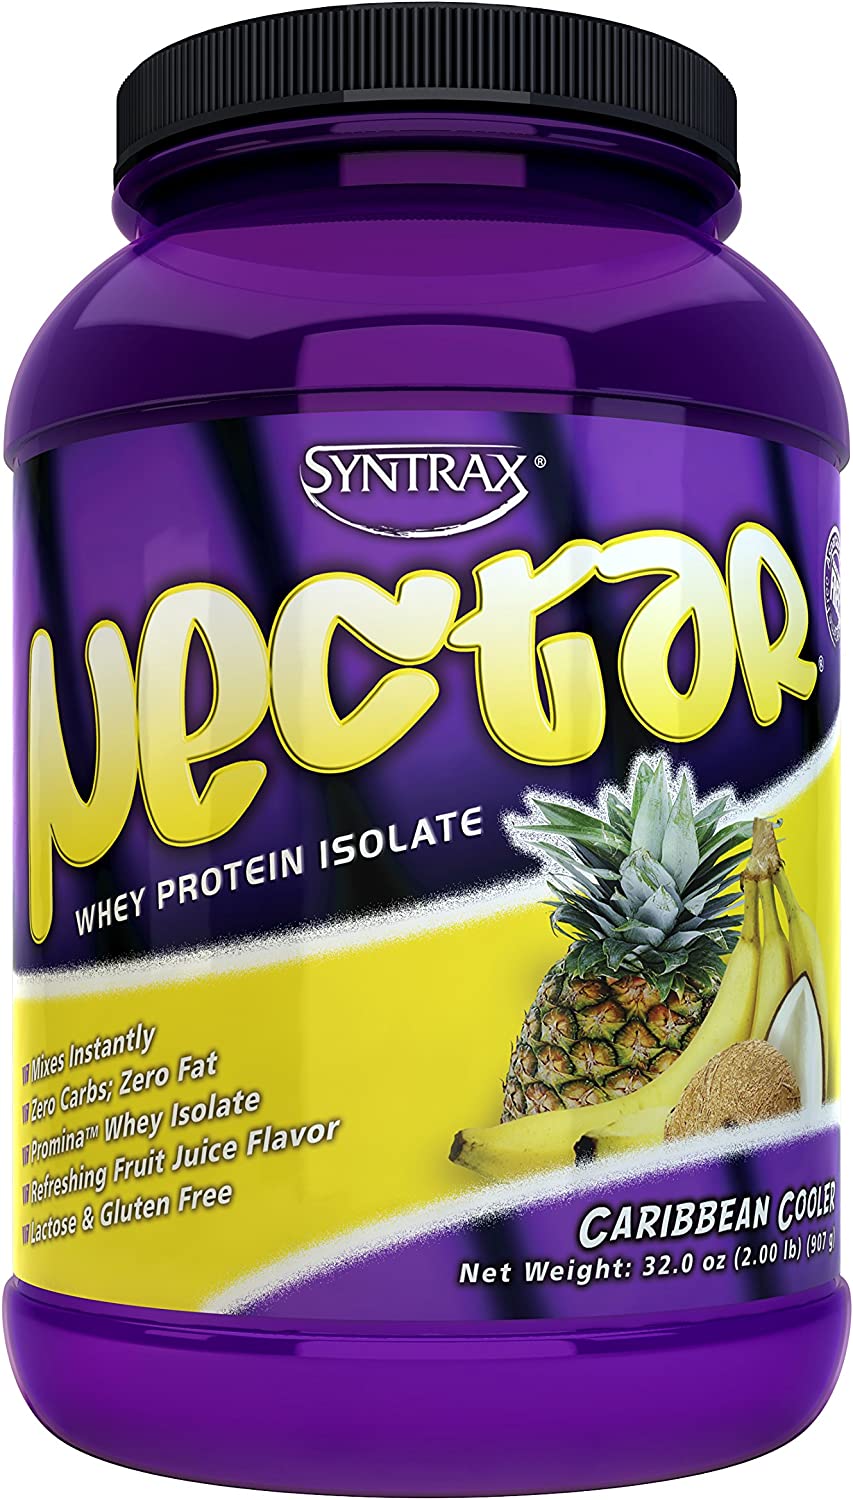 Syntrax Nectar - Caribbean Cooler 2 lb